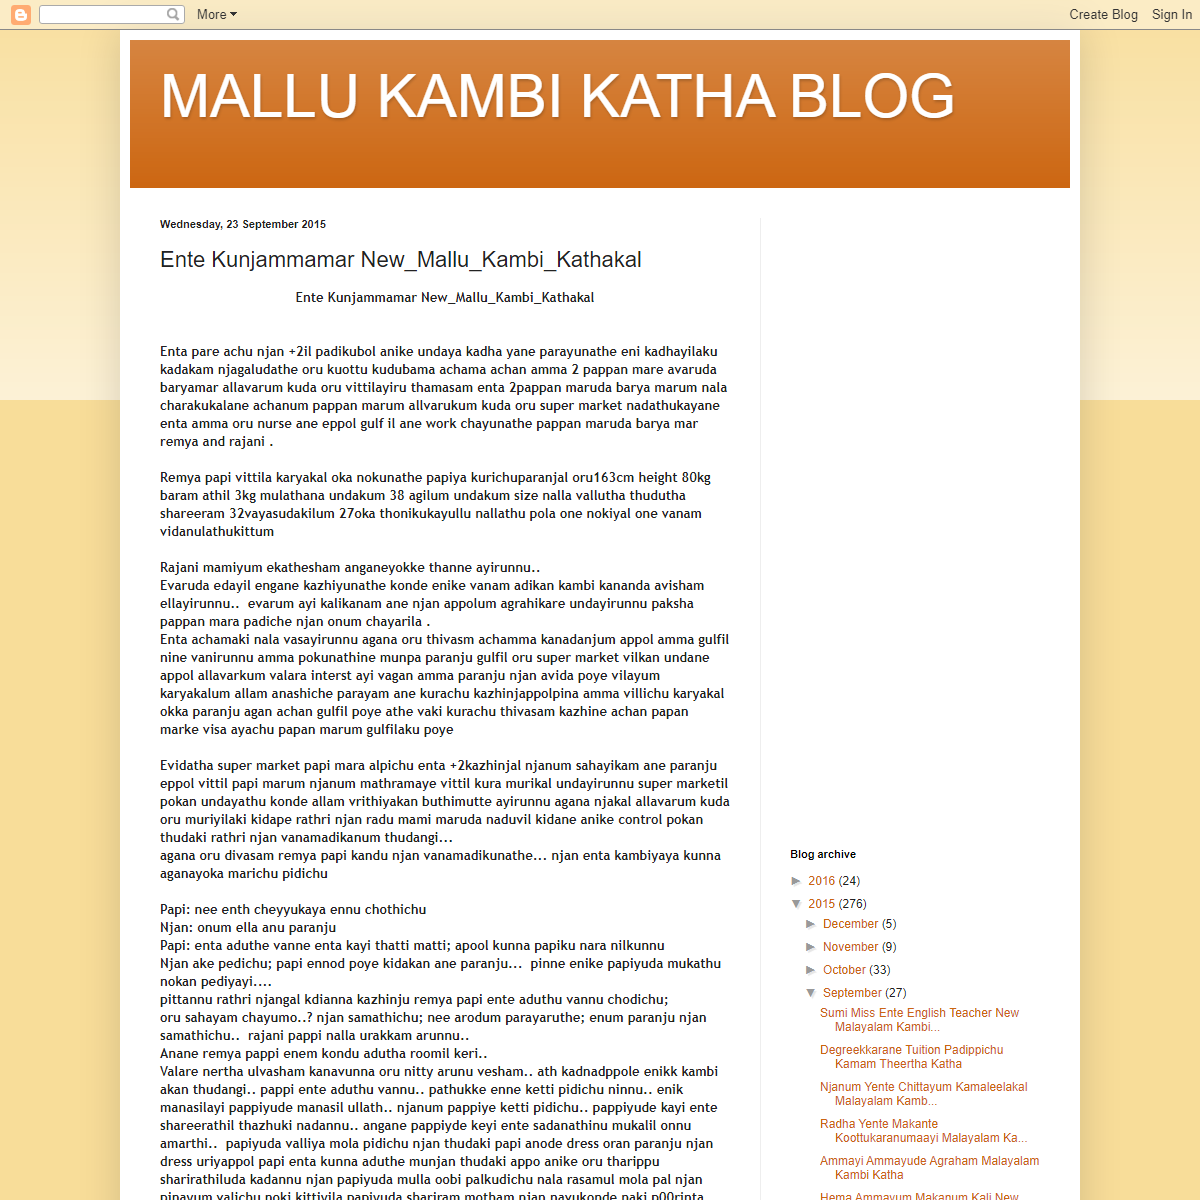 A complete backup of https://mallukambikathablog.blogspot.com/2015/09/ente-kunjammamar-newmallukambikathakal.html